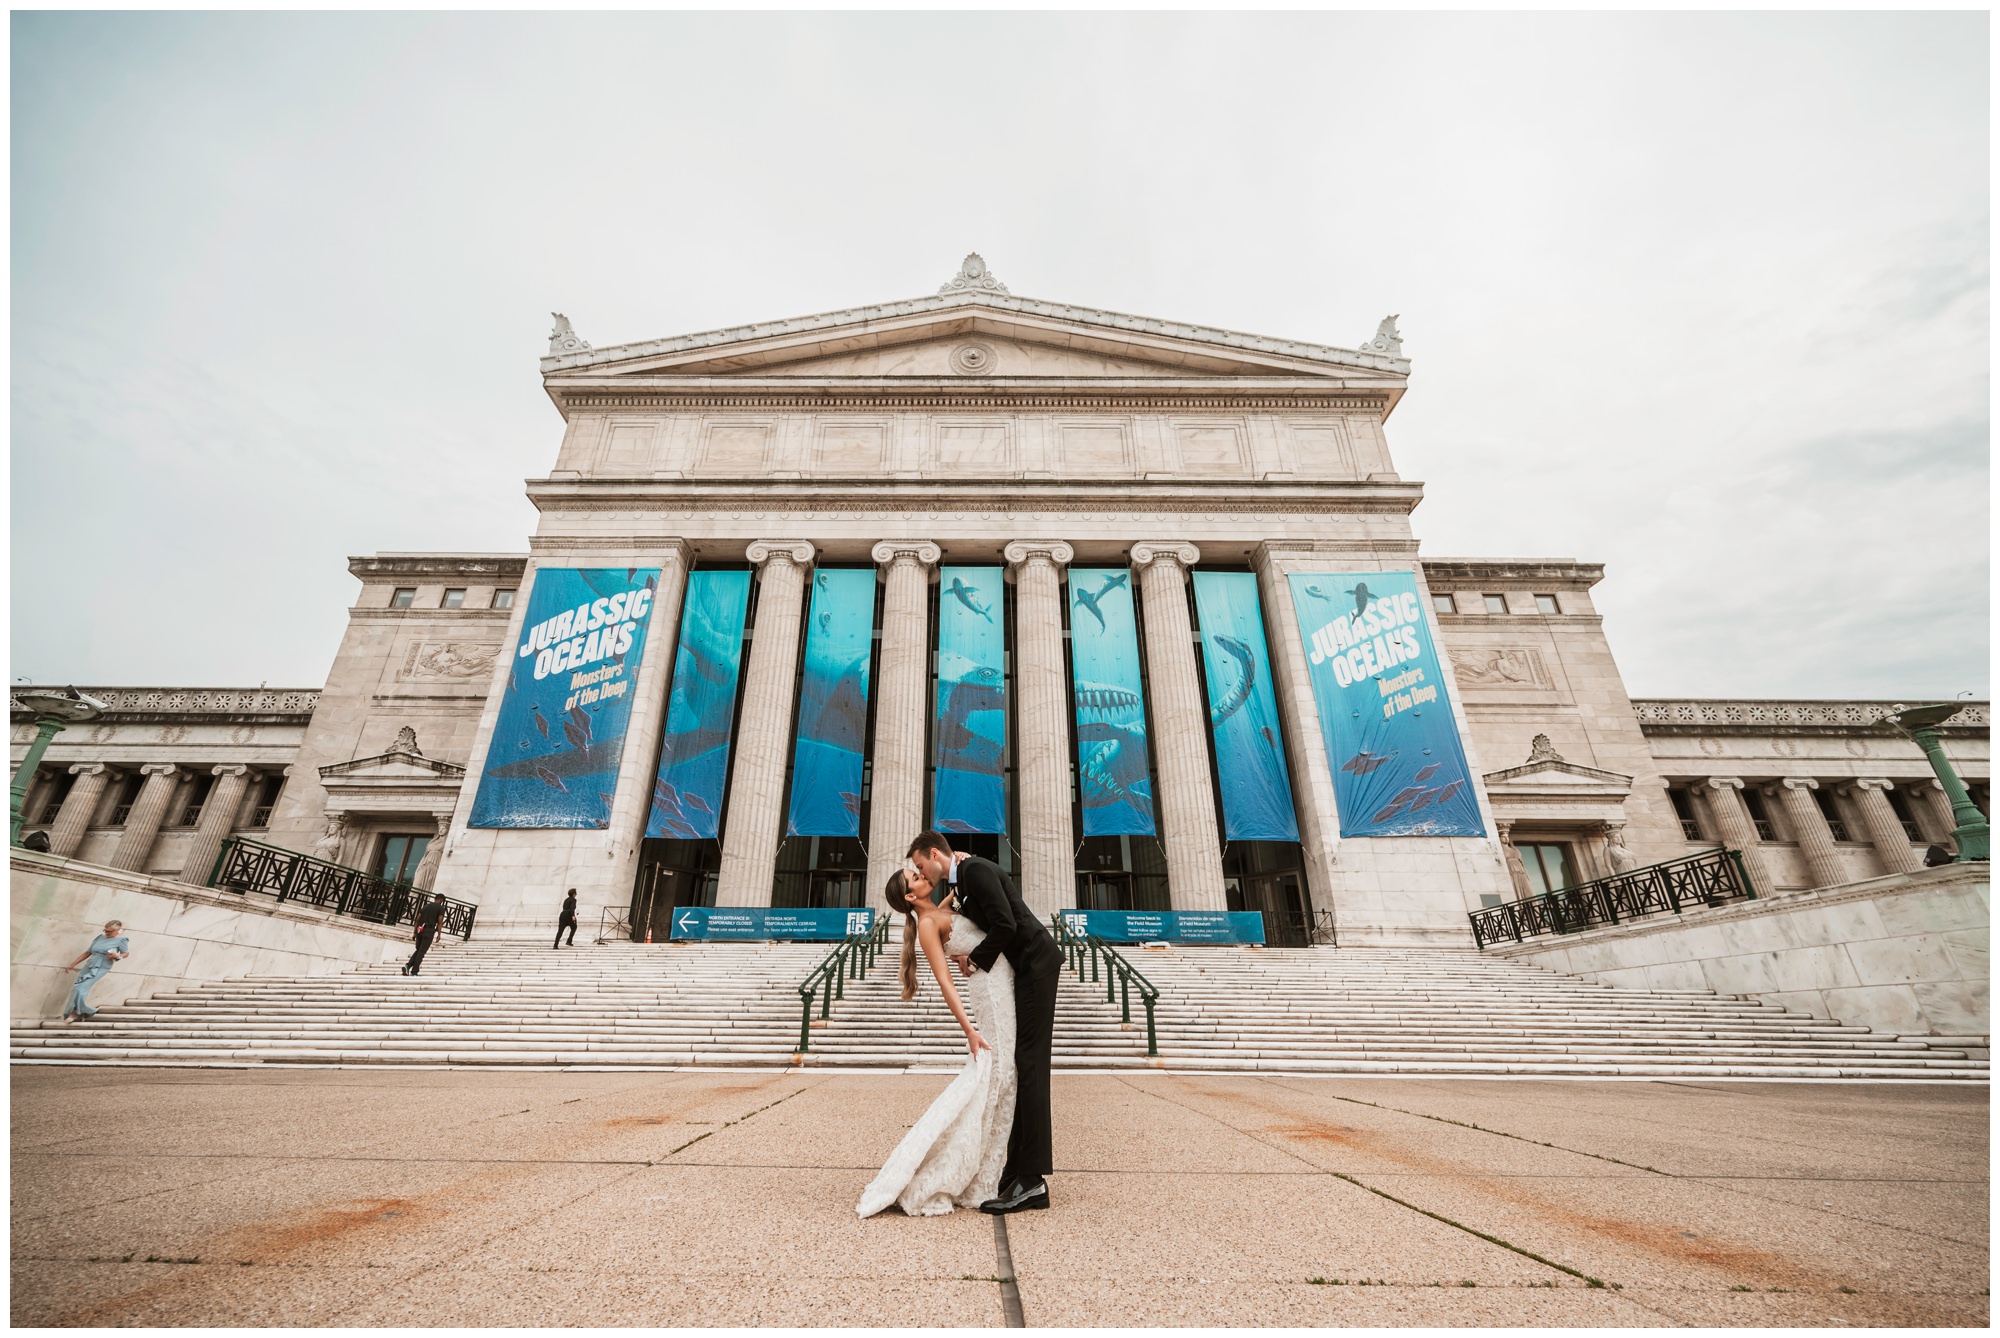 Field Museum of Chicago wedding; The Adamkovi Chicago wedding photographer